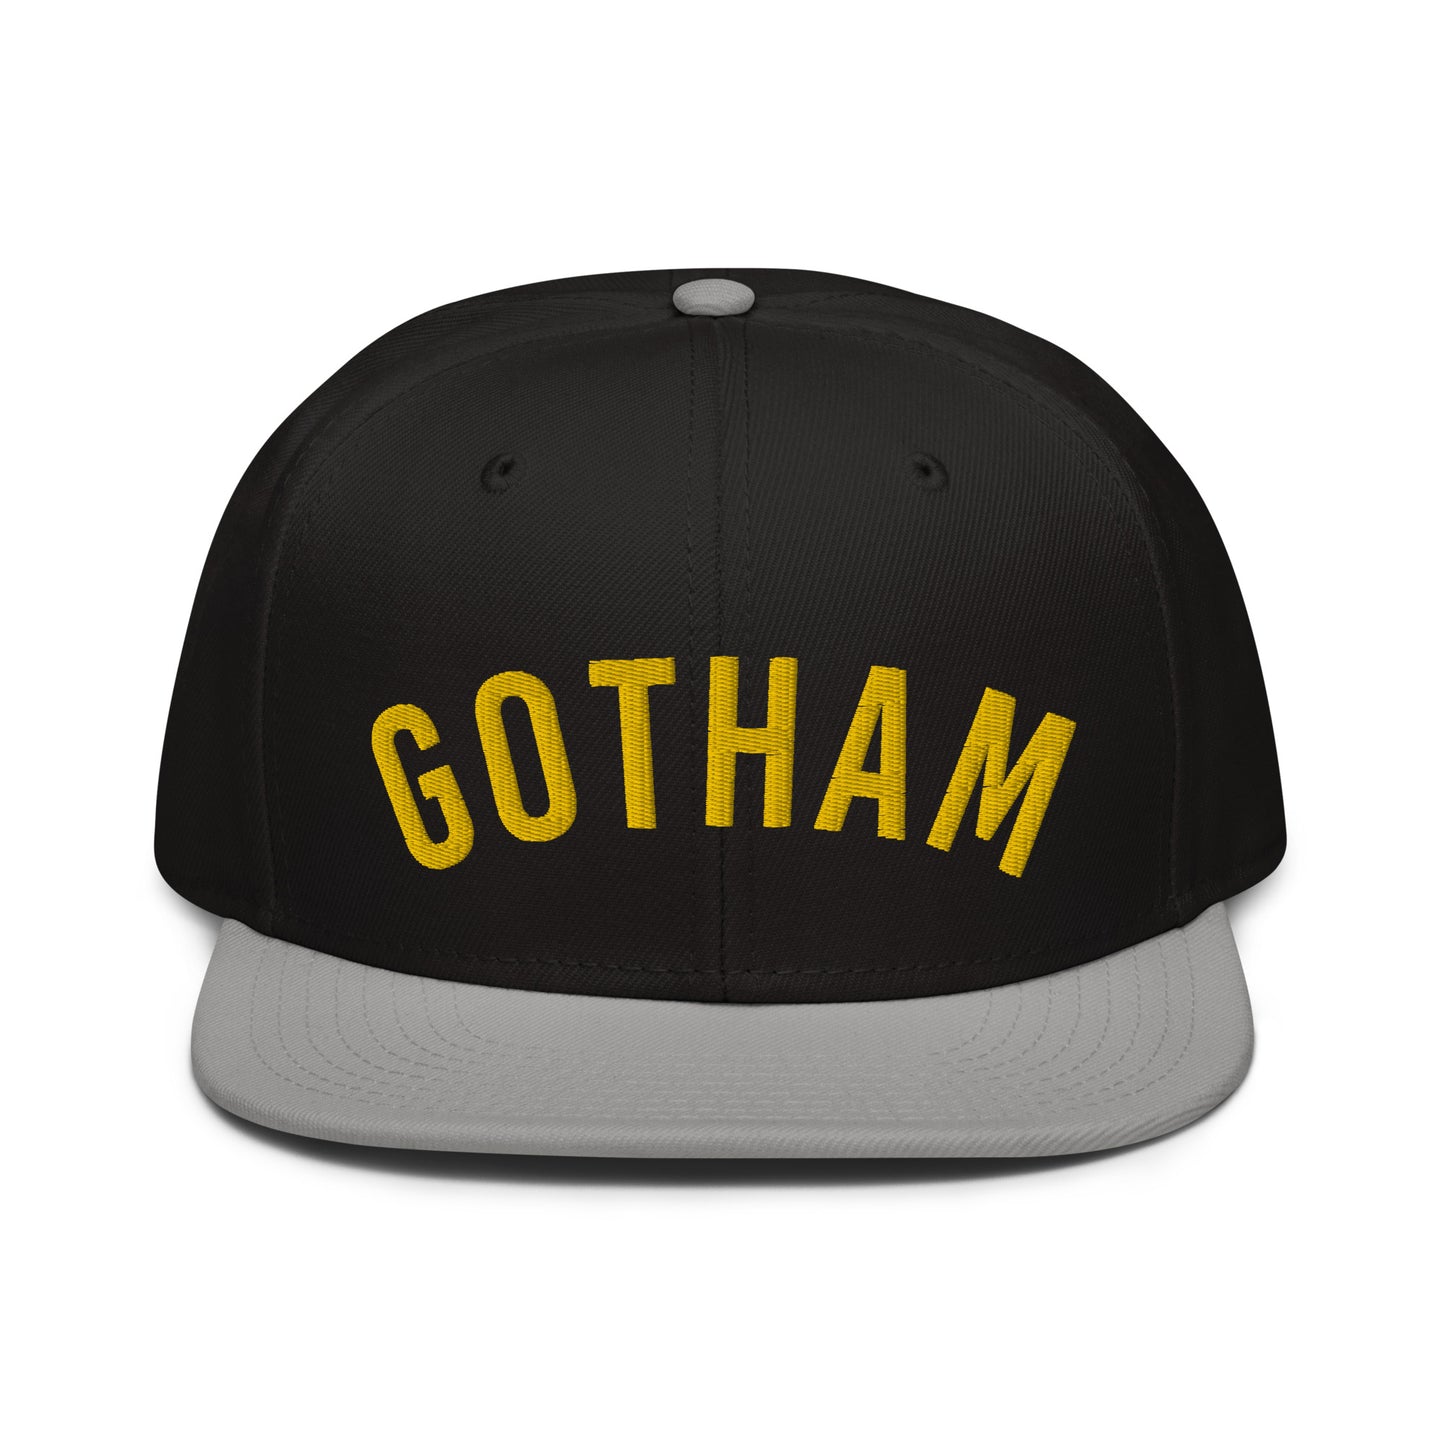 Gotham Home Team snapback hat